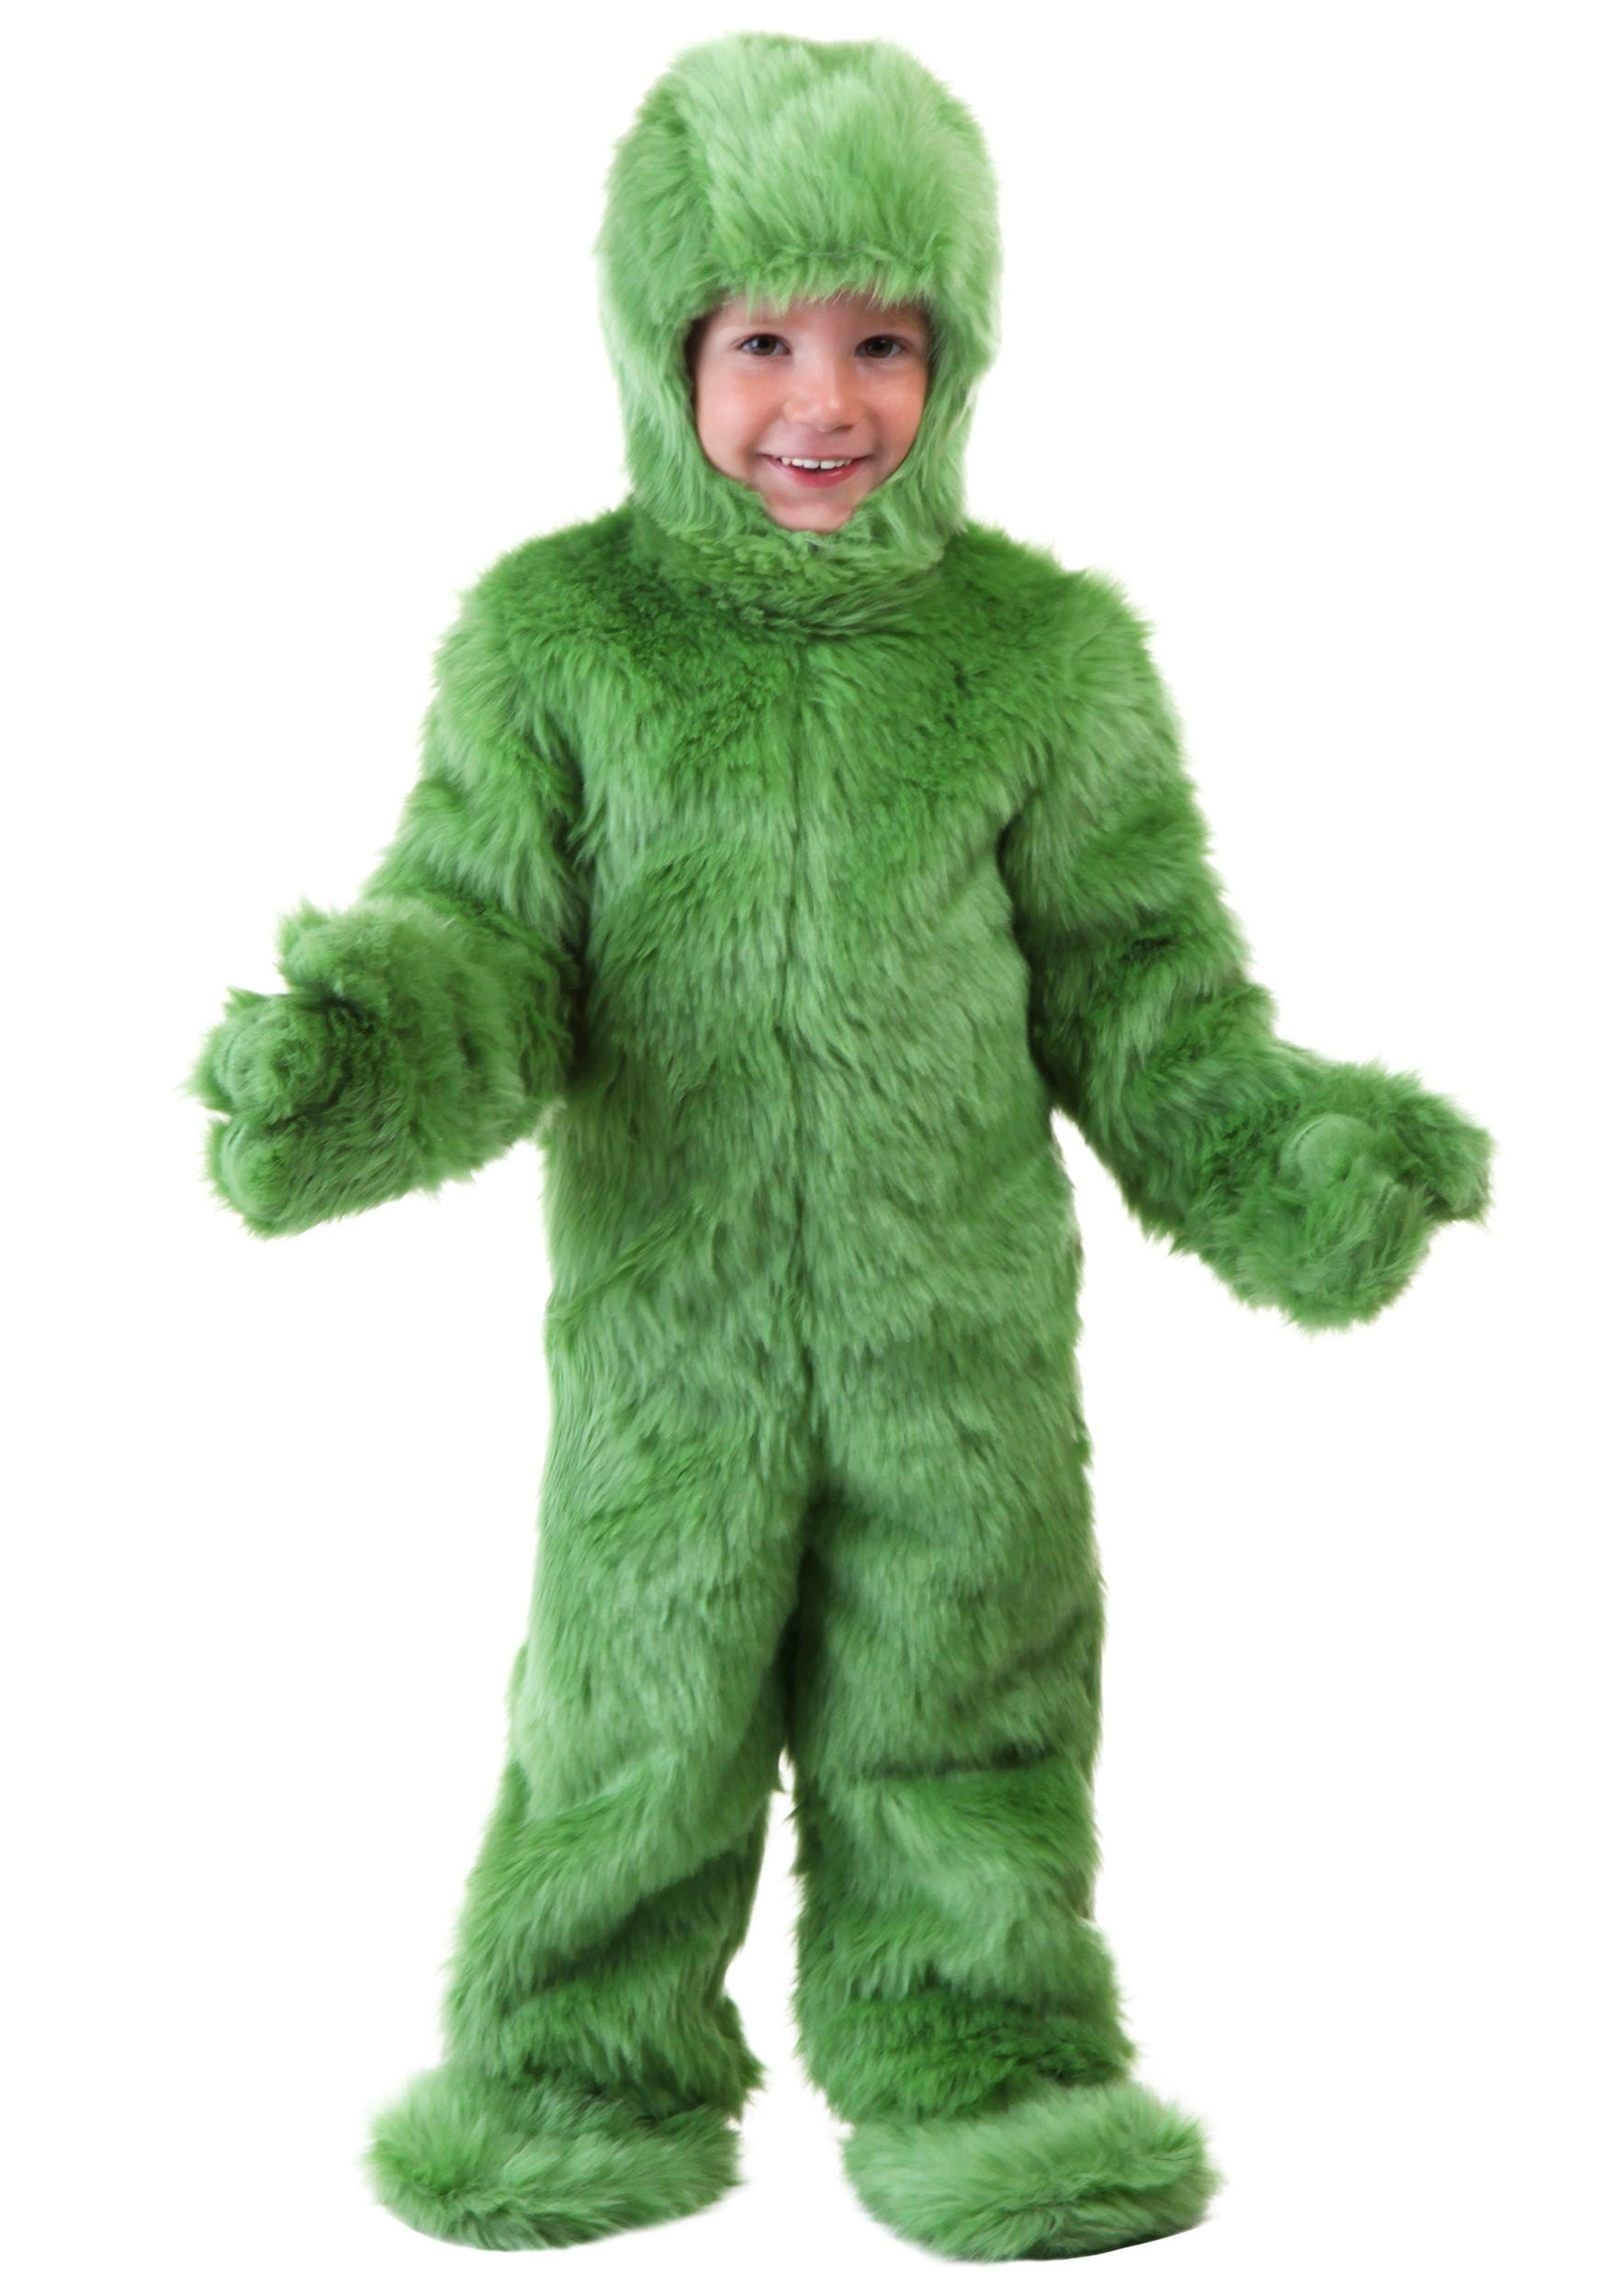 FUN Costumes - Toddler Green Furry Jumpsuit - Walmart.com - Walmart.com